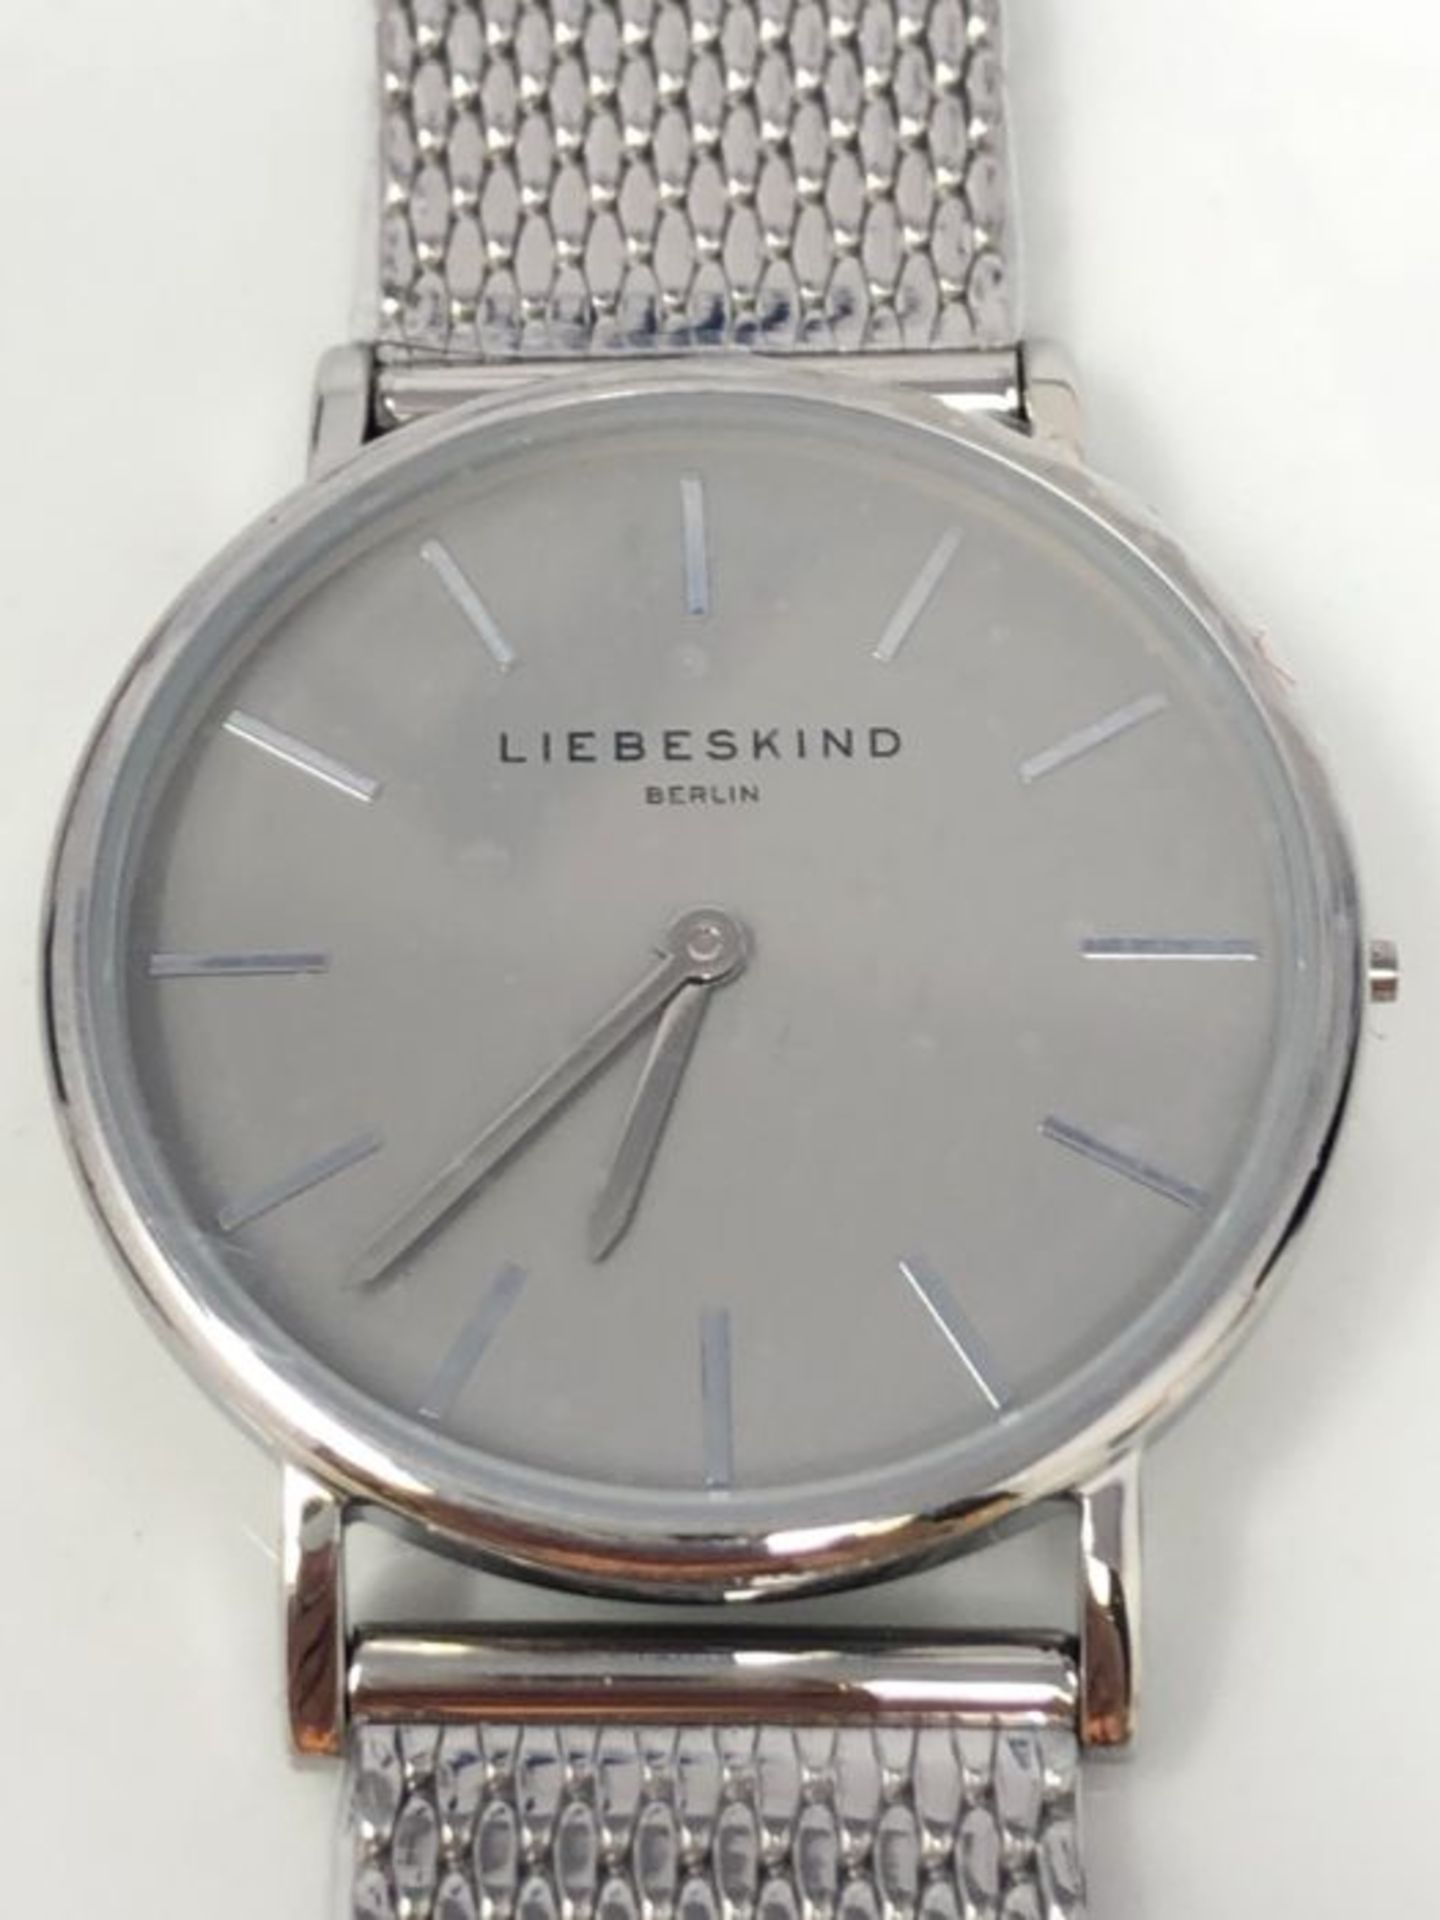 RRP £67.00 Liebeskind Berlin Damen Analog Quarz Uhr mit Edelstahl Armband LT-0169-MQ - Image 3 of 3